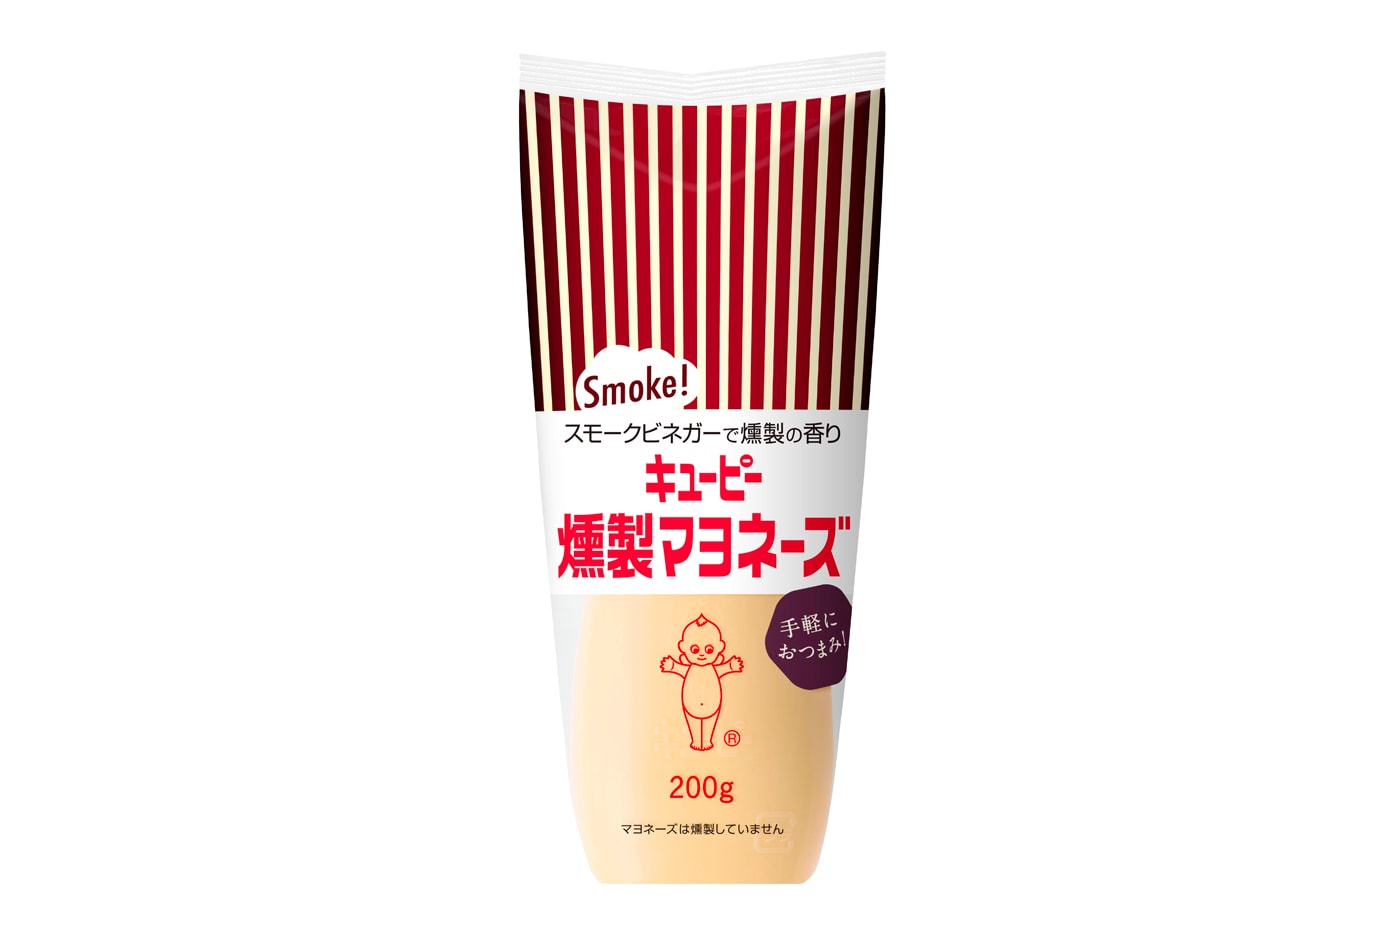 Kewpie Smoked Mayonnaise kunsei mayonezu Launch Taste Review Price Buy Where